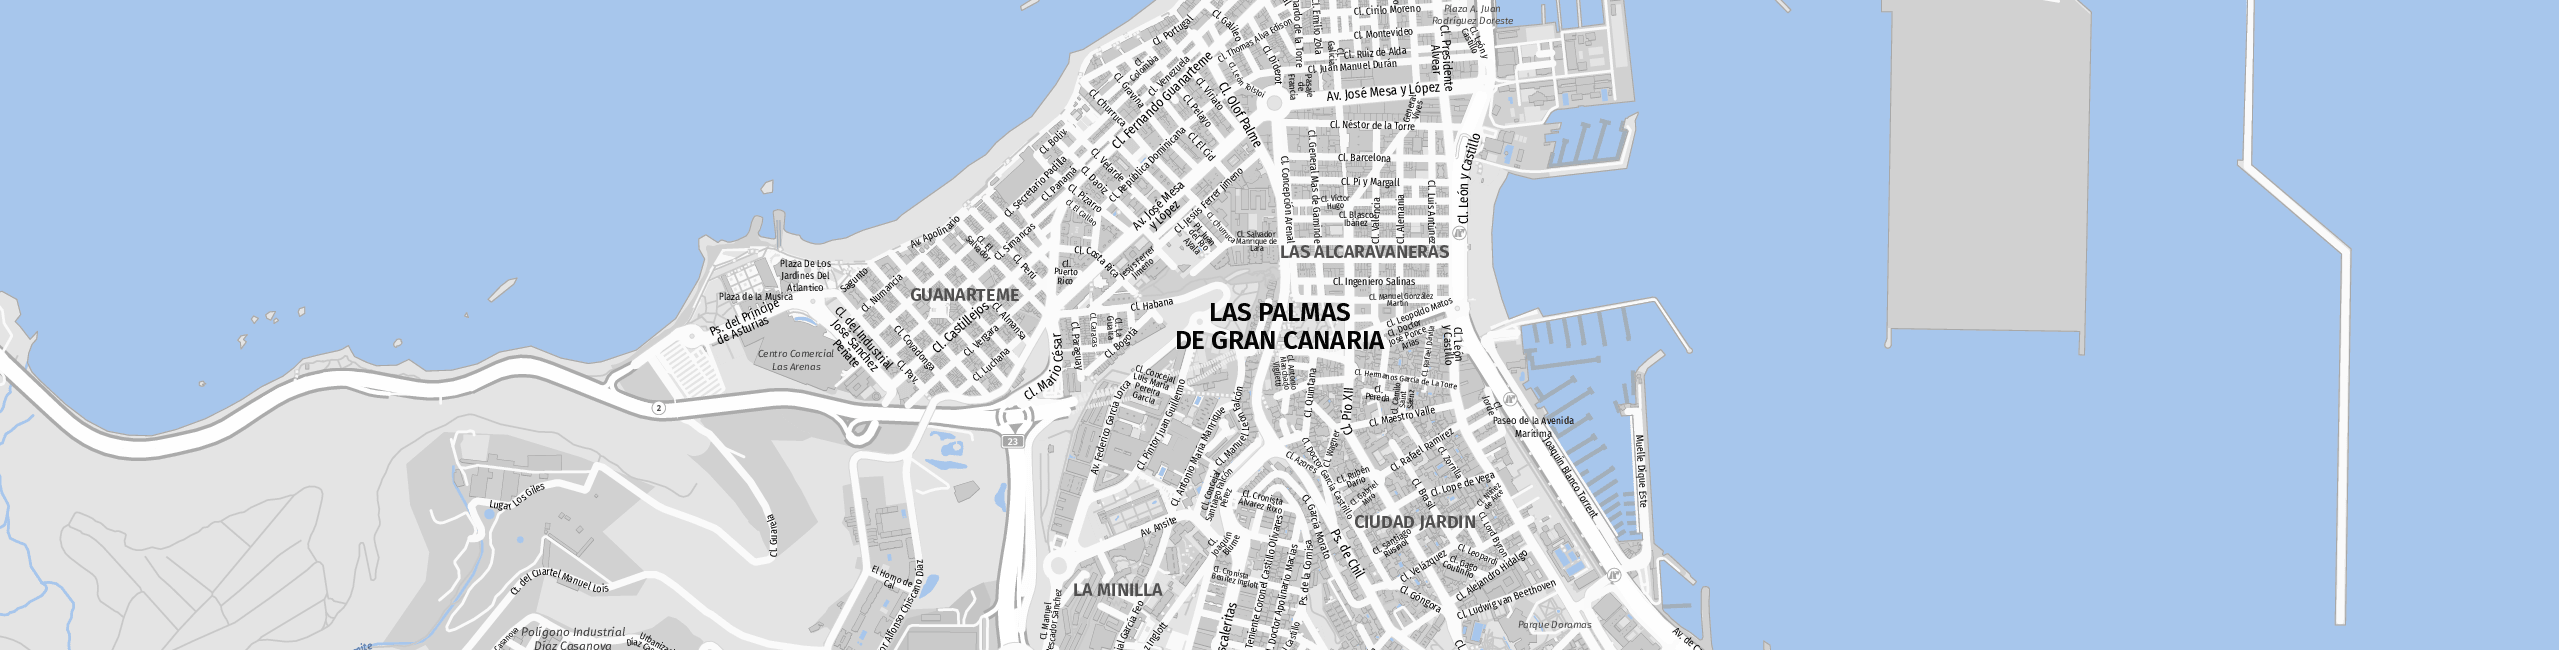 Stadtplan Las Palmas de Gran Canaria zum Downloaden.